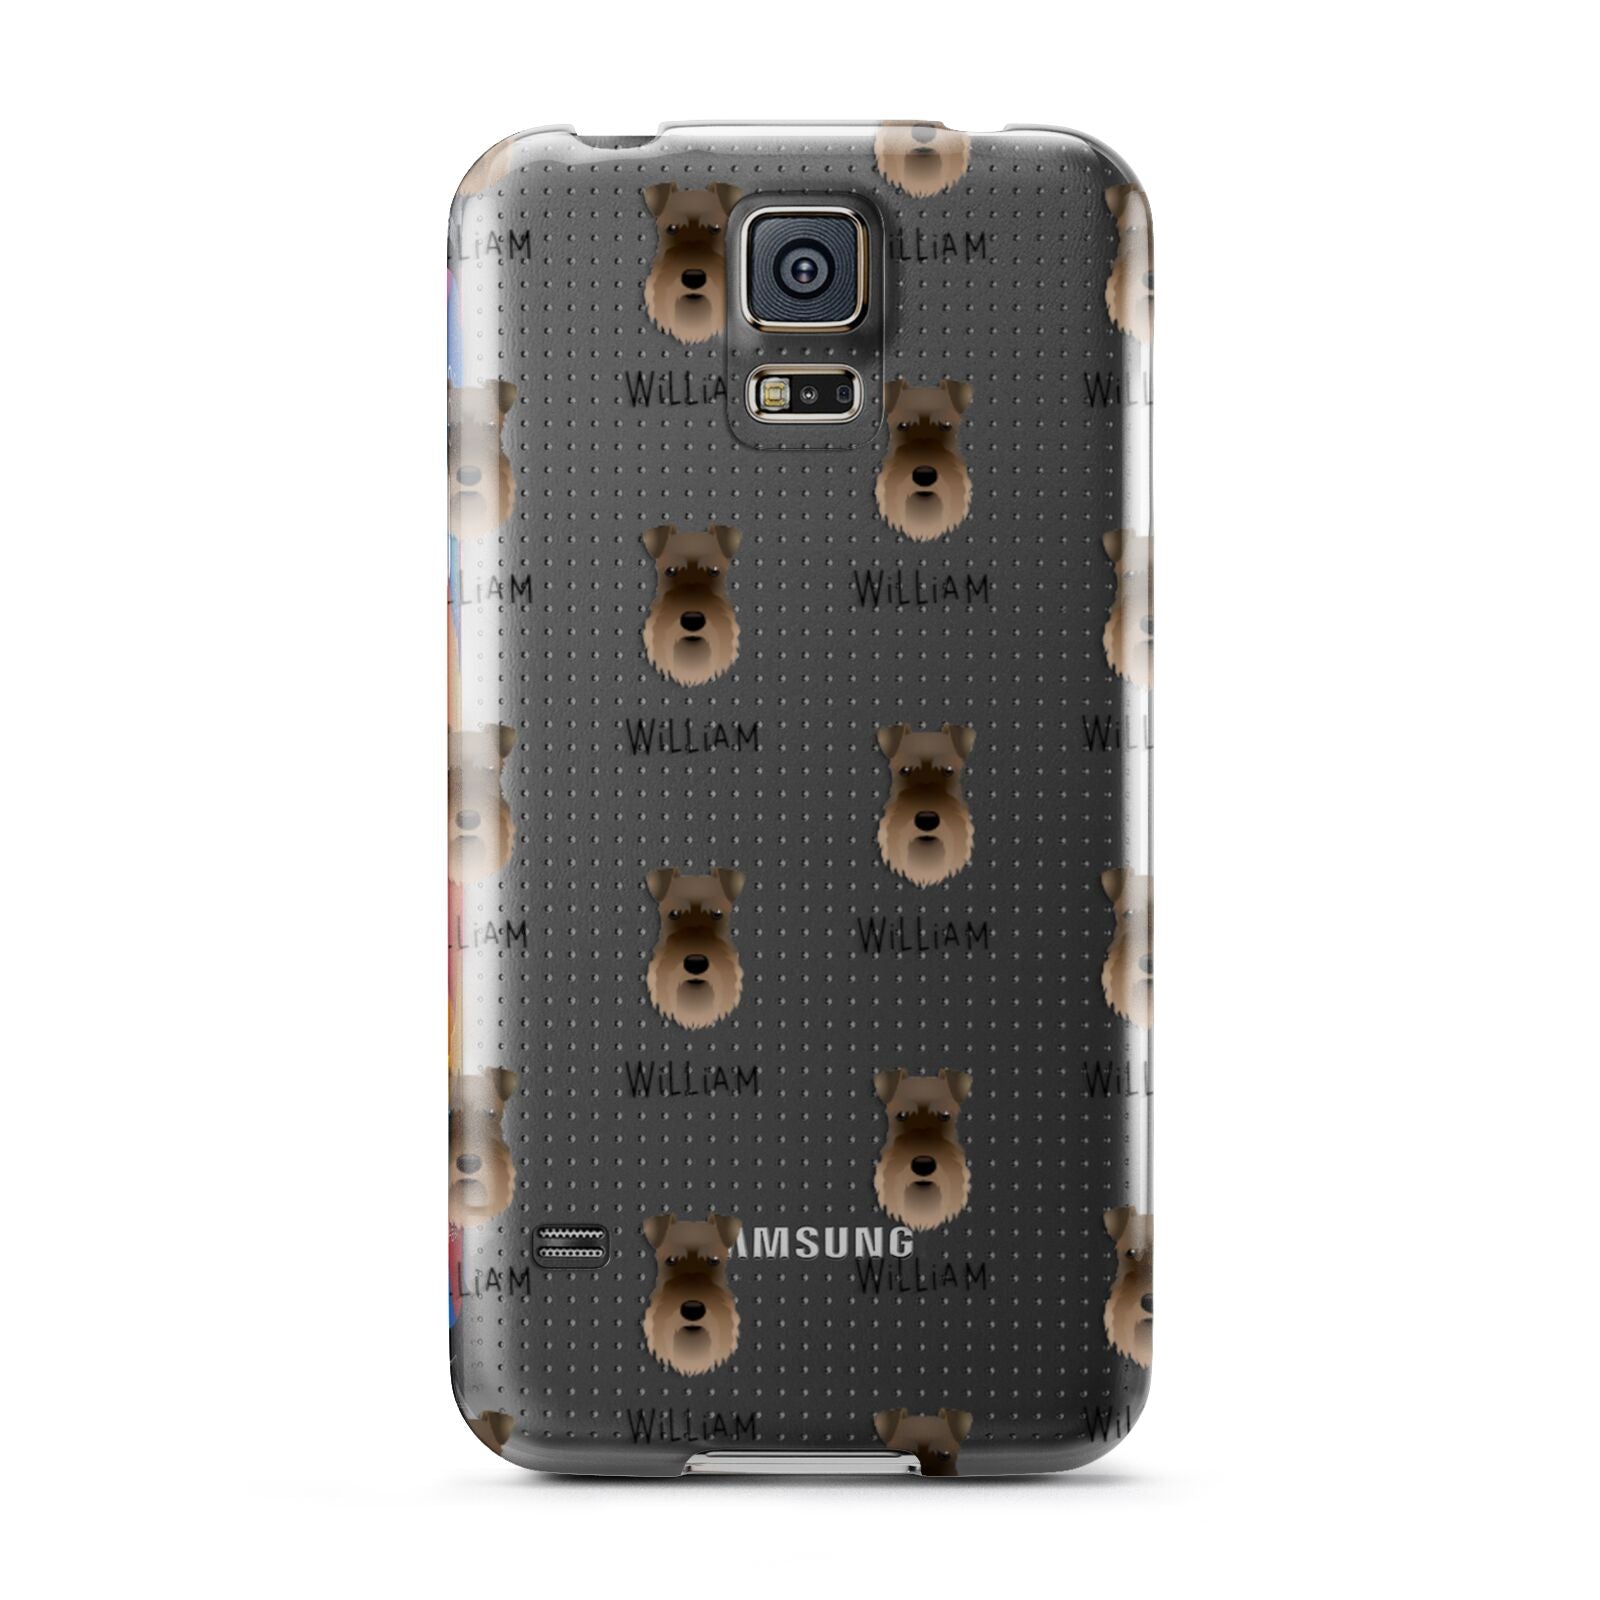 Schnauzer Icon with Name Samsung Galaxy S5 Case